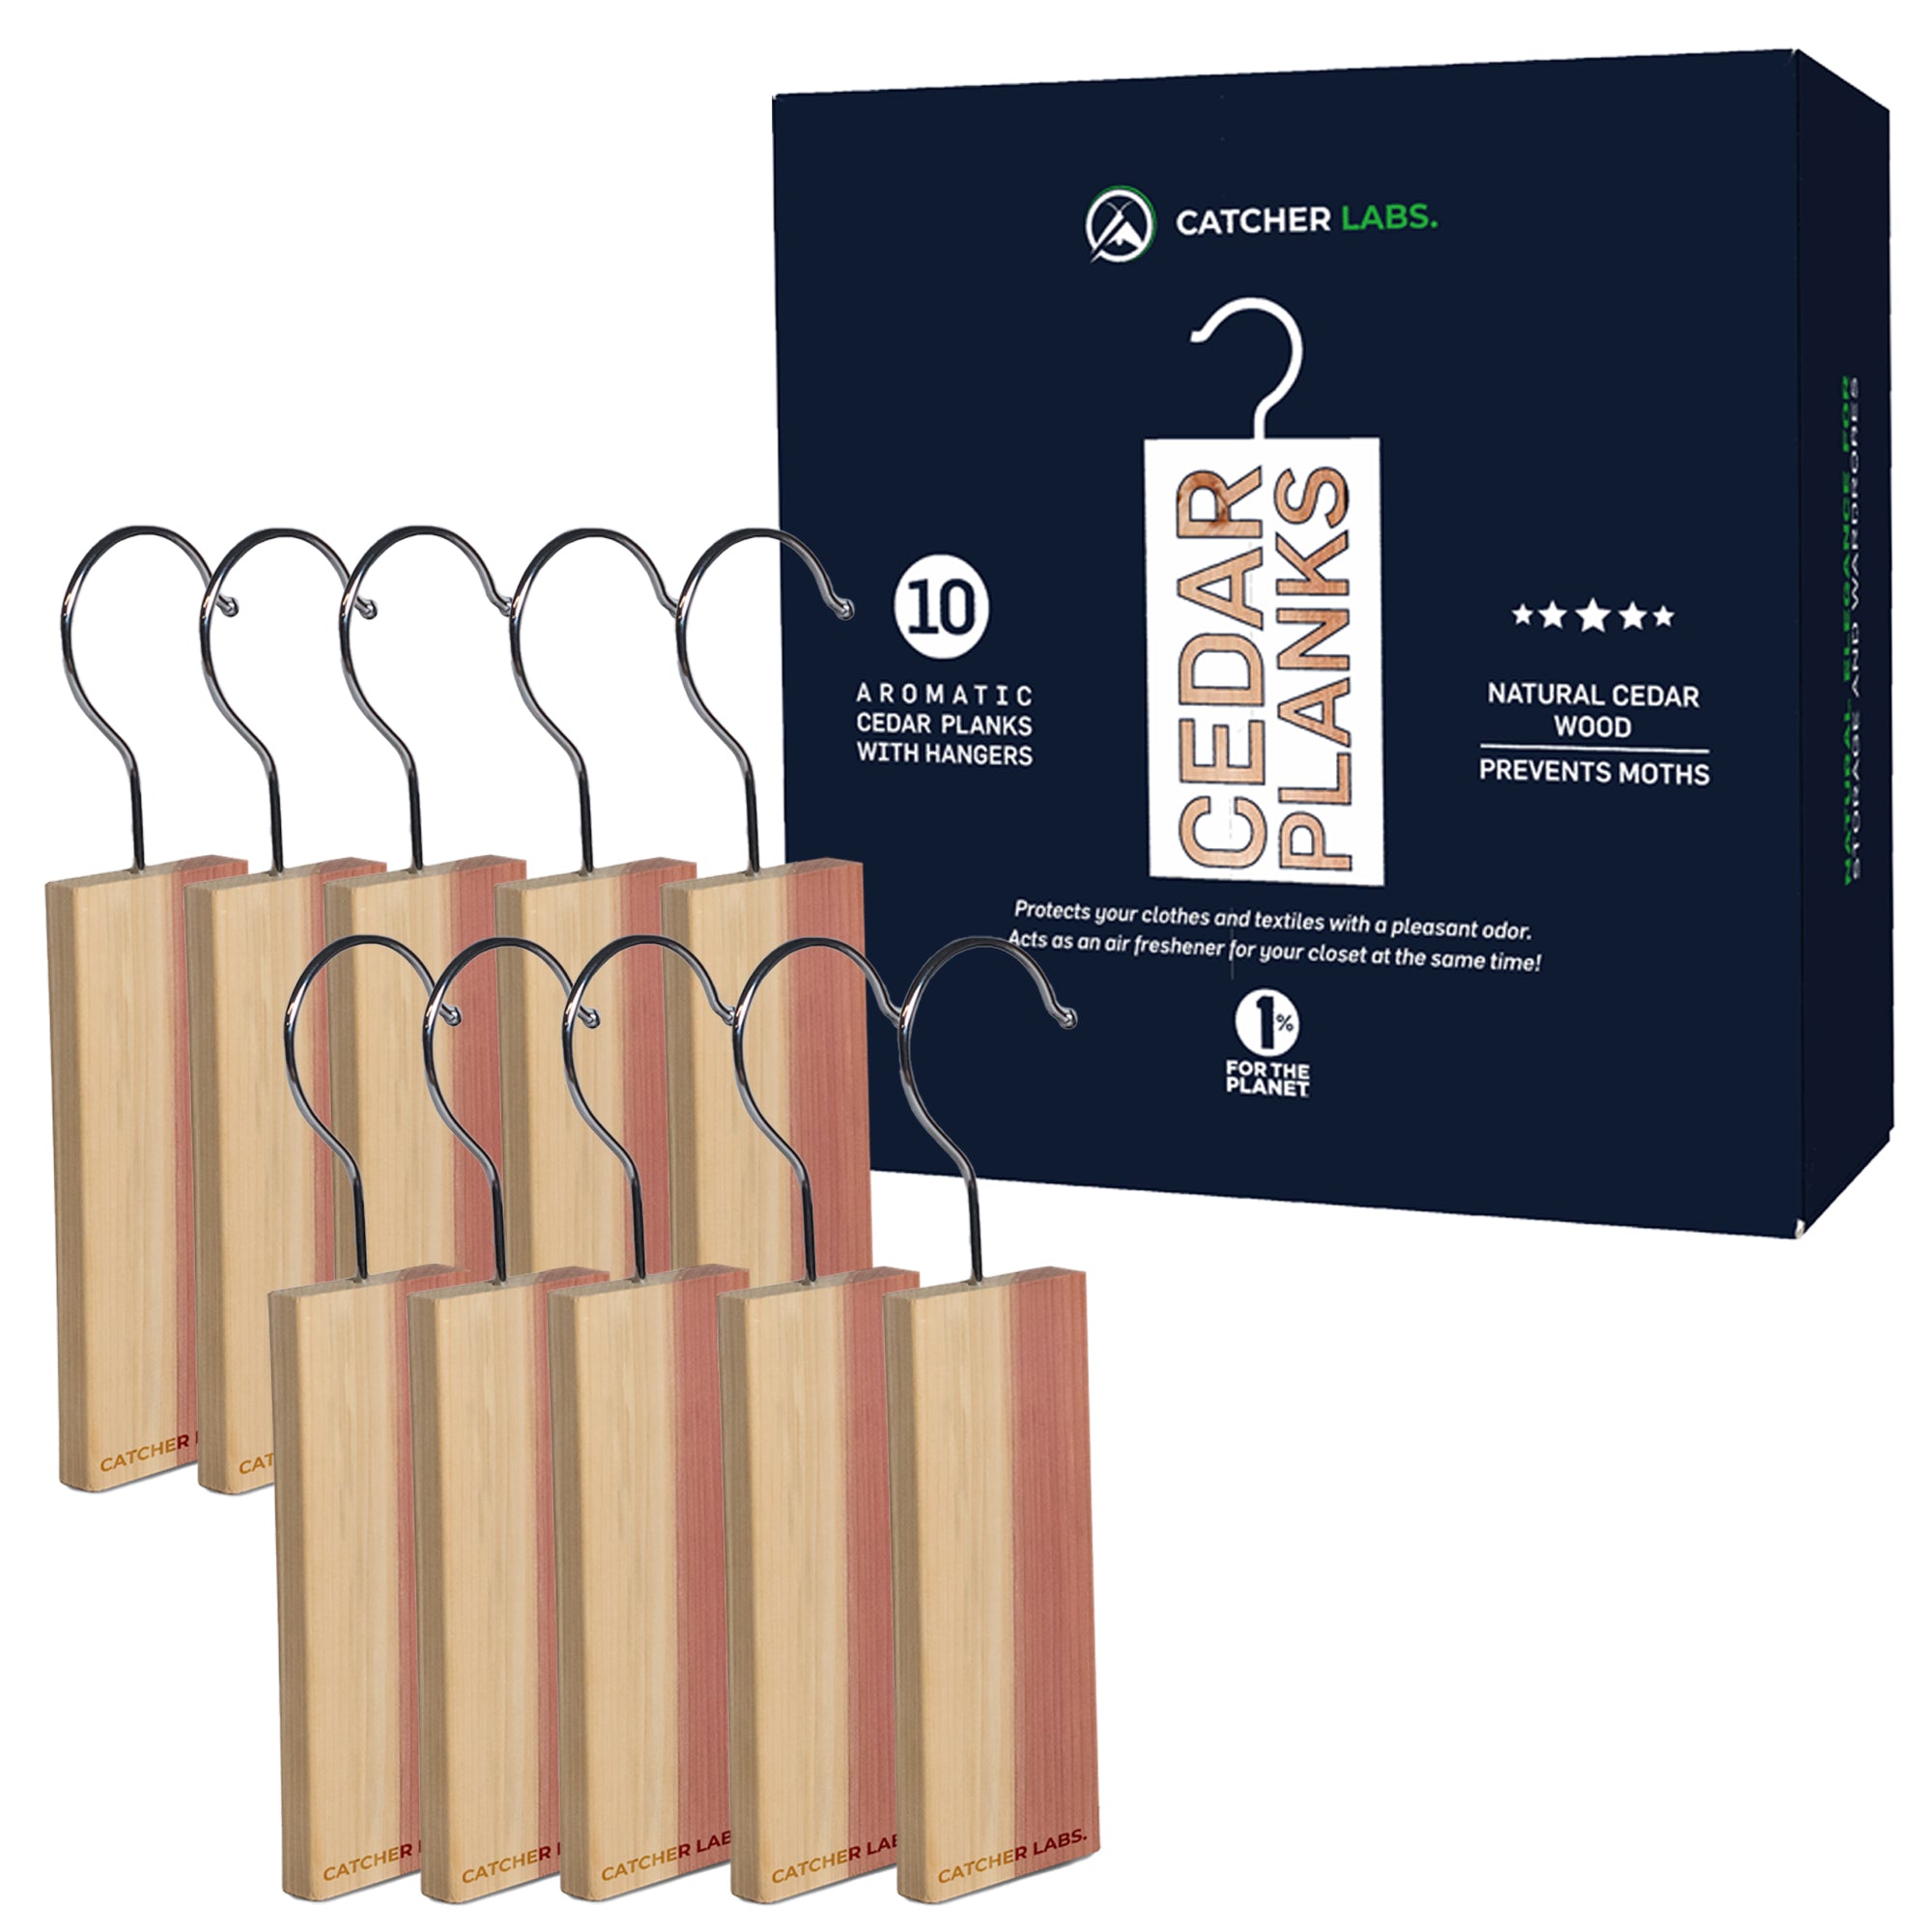 Catcher Labs Cedar Planks for Moth Repellent | Cedar Blocks for Clothes Storage | Better Than Moth Balls for Closet | Cedar Hangers Clothes Moths